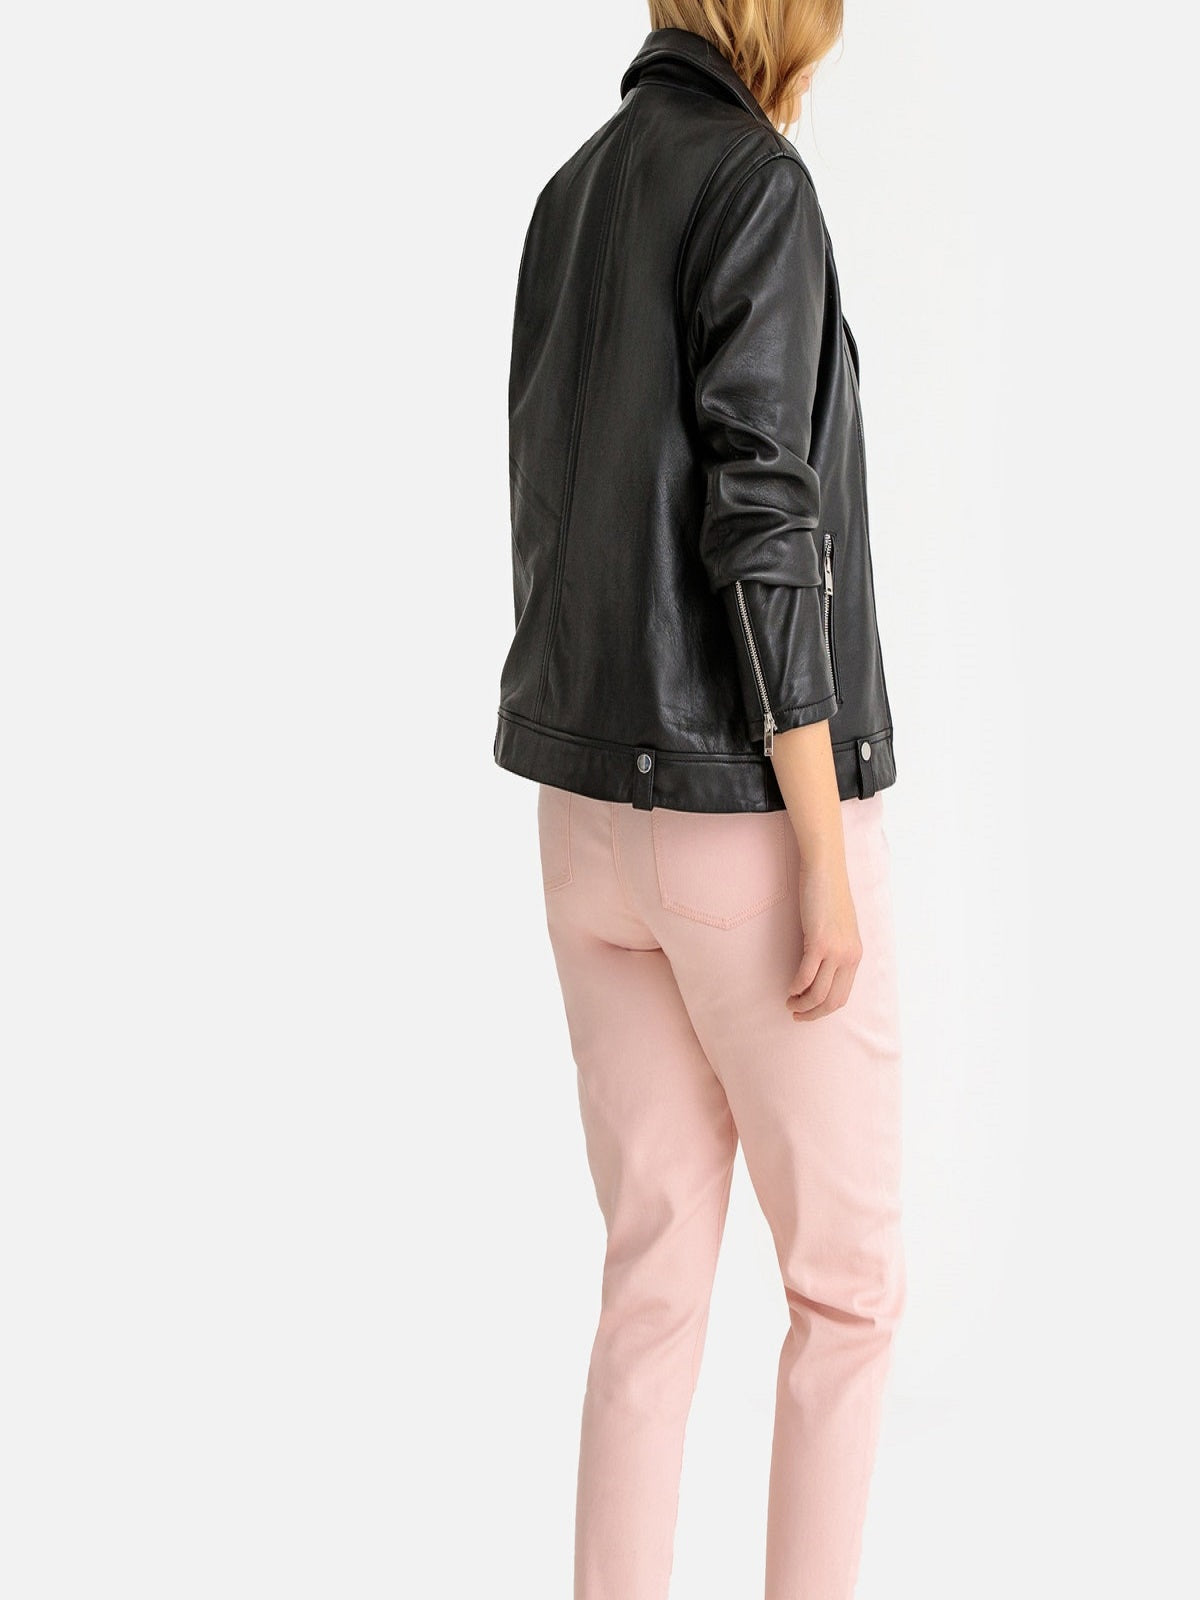 Asymmetrical Black Leather Jacket For Women - LJ